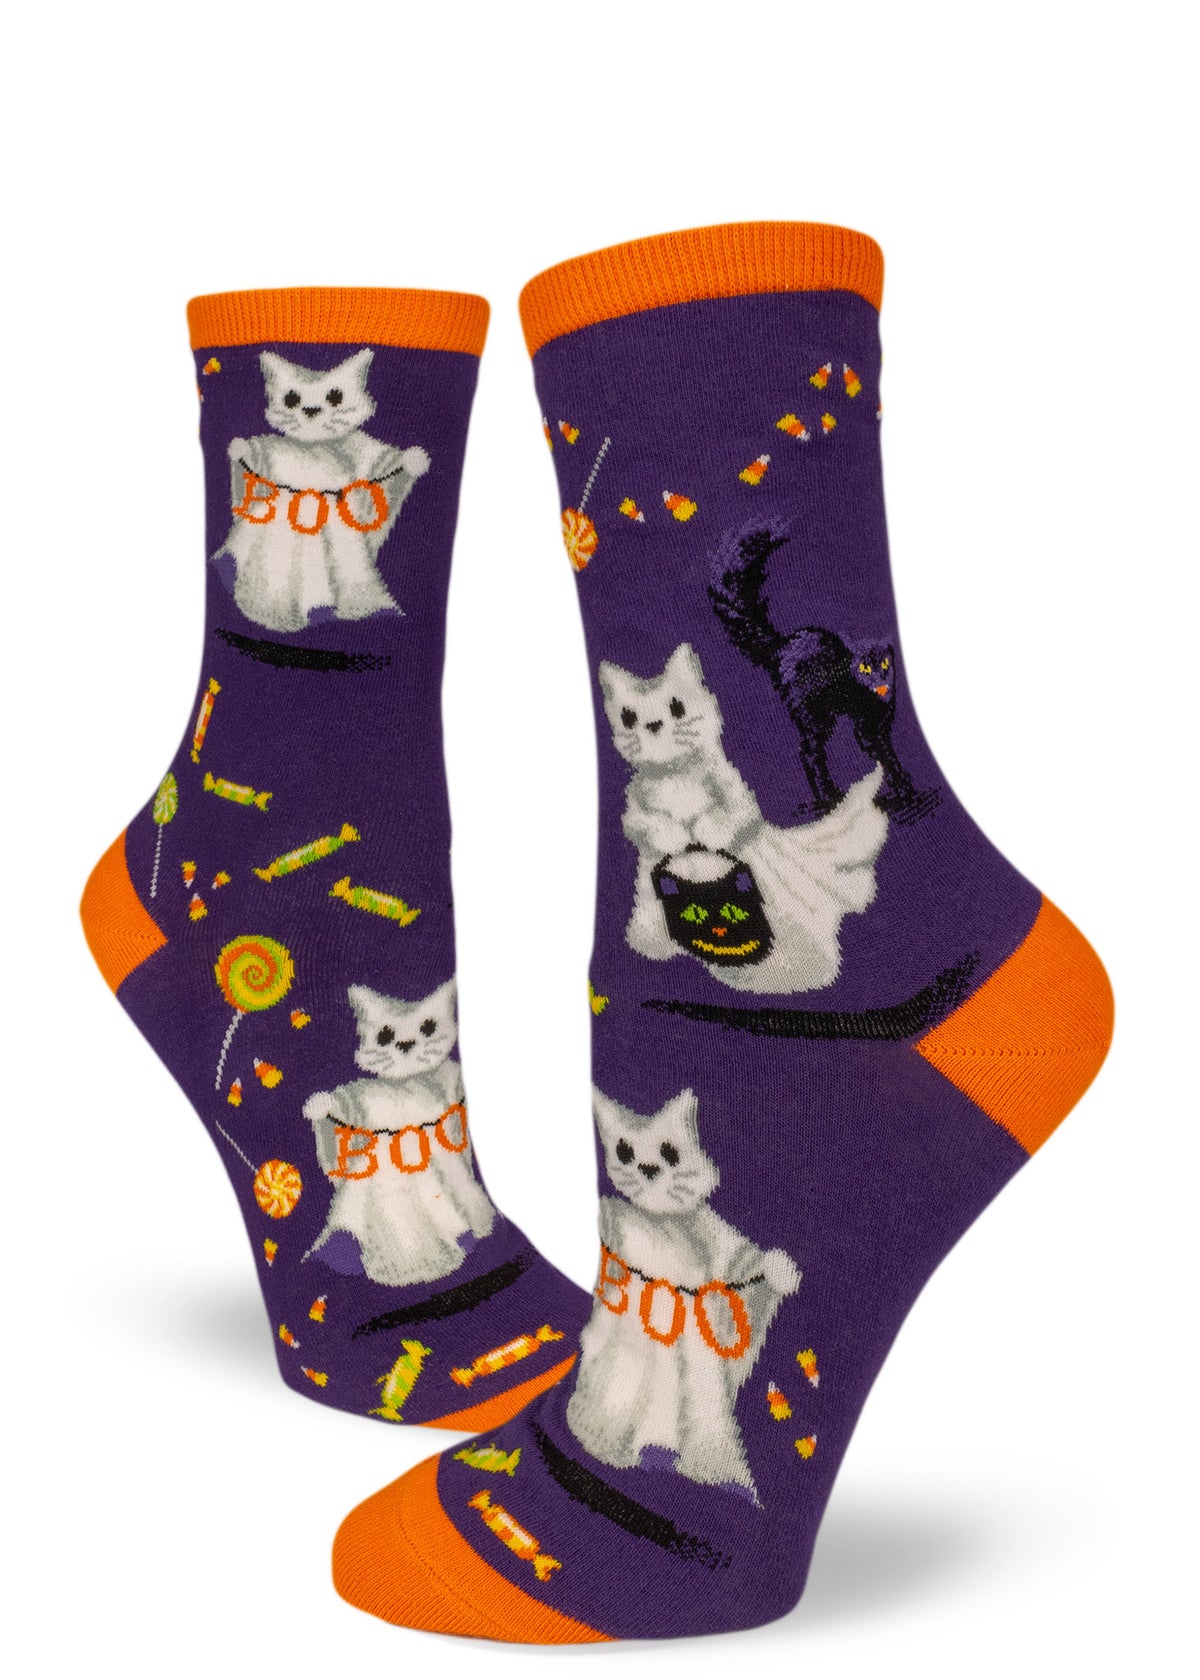 Cat ghosts trick-or-treat on Halloween socks in purple and orange.